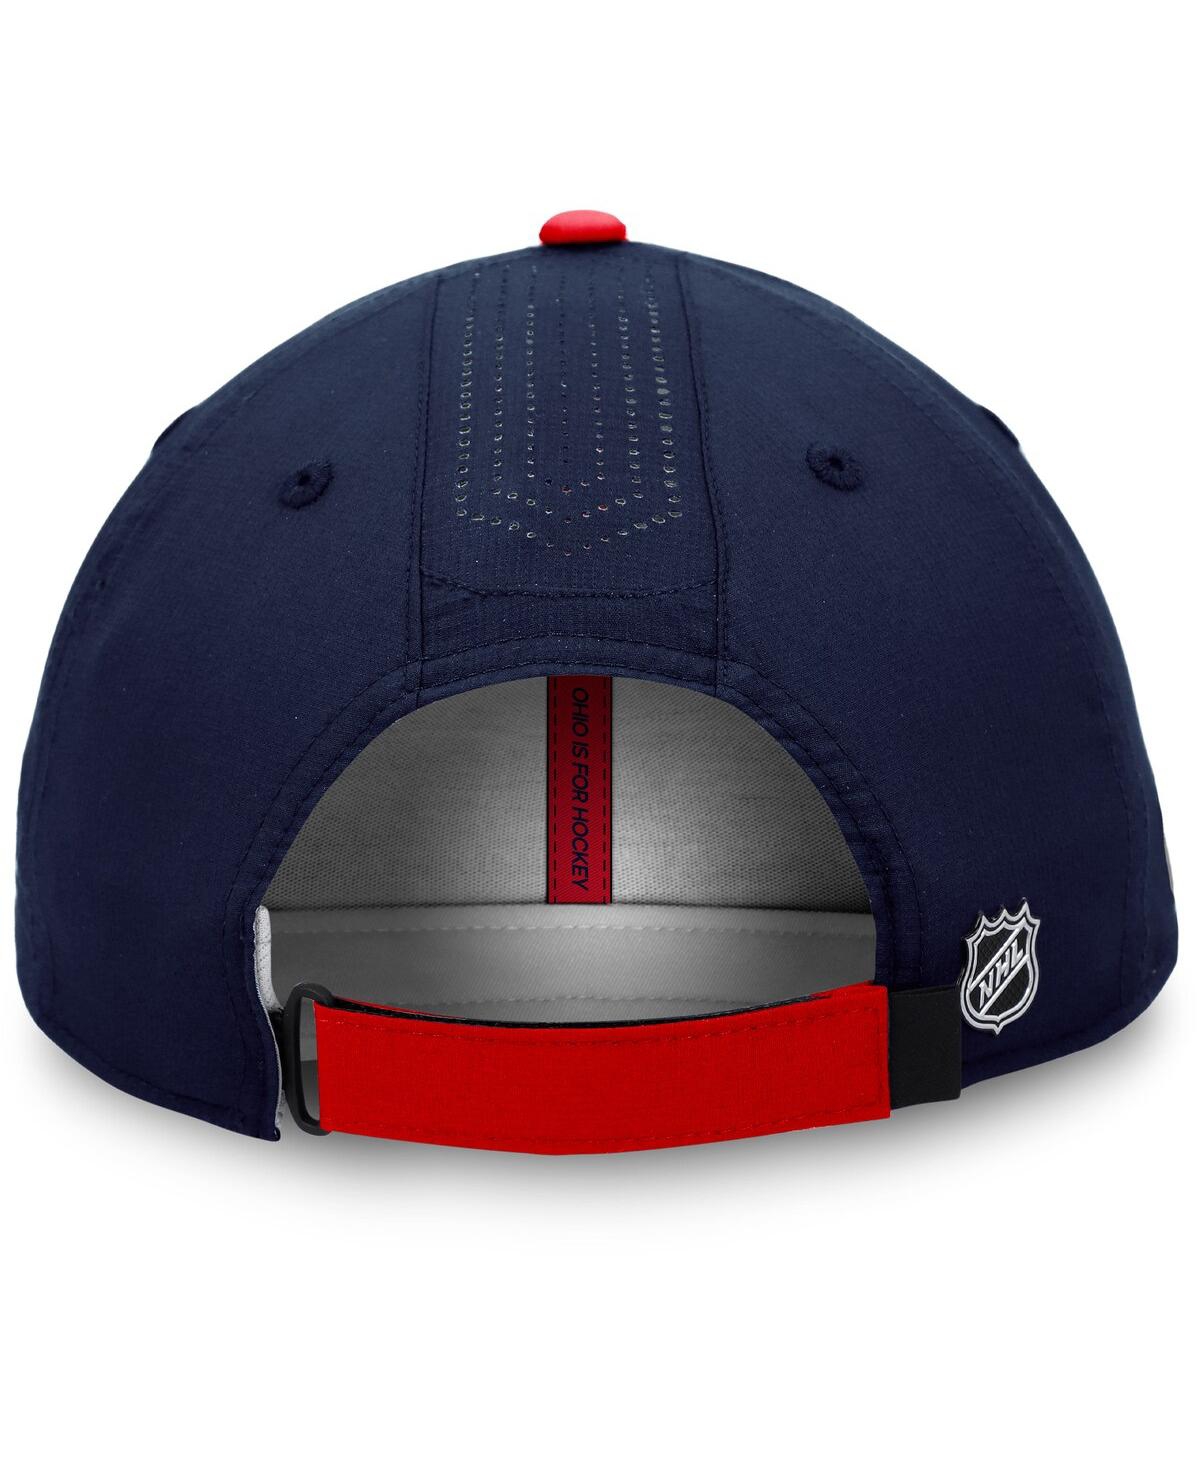 Shop Fanatics Men's  Navy Columbus Blue Jackets Authentic Pro Rink Pinnacle Adjustable Hat